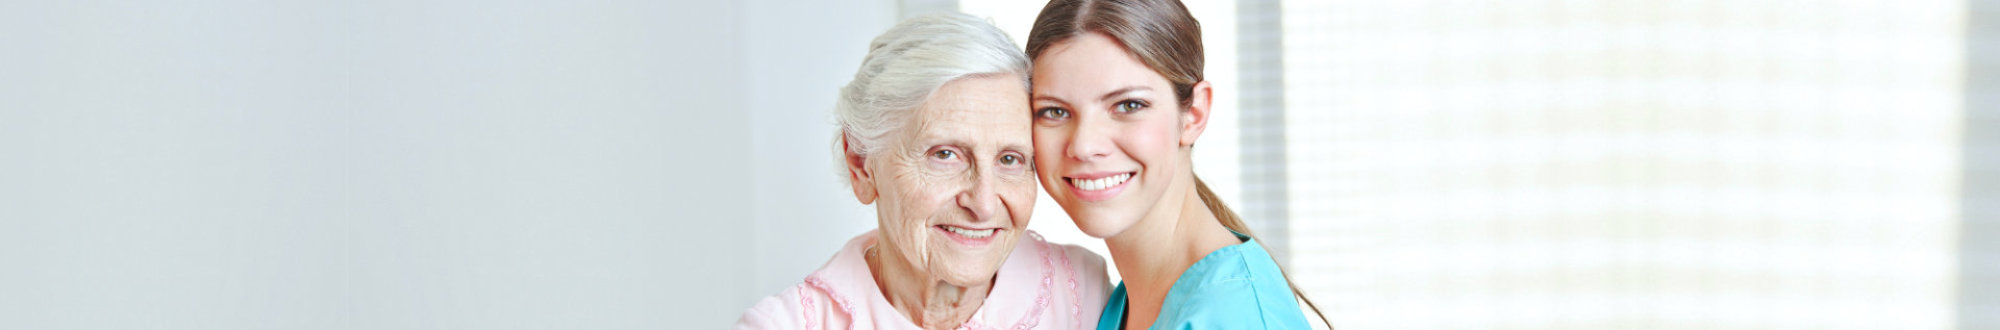 Smiling caregiver embracing happy senior women in nursing home